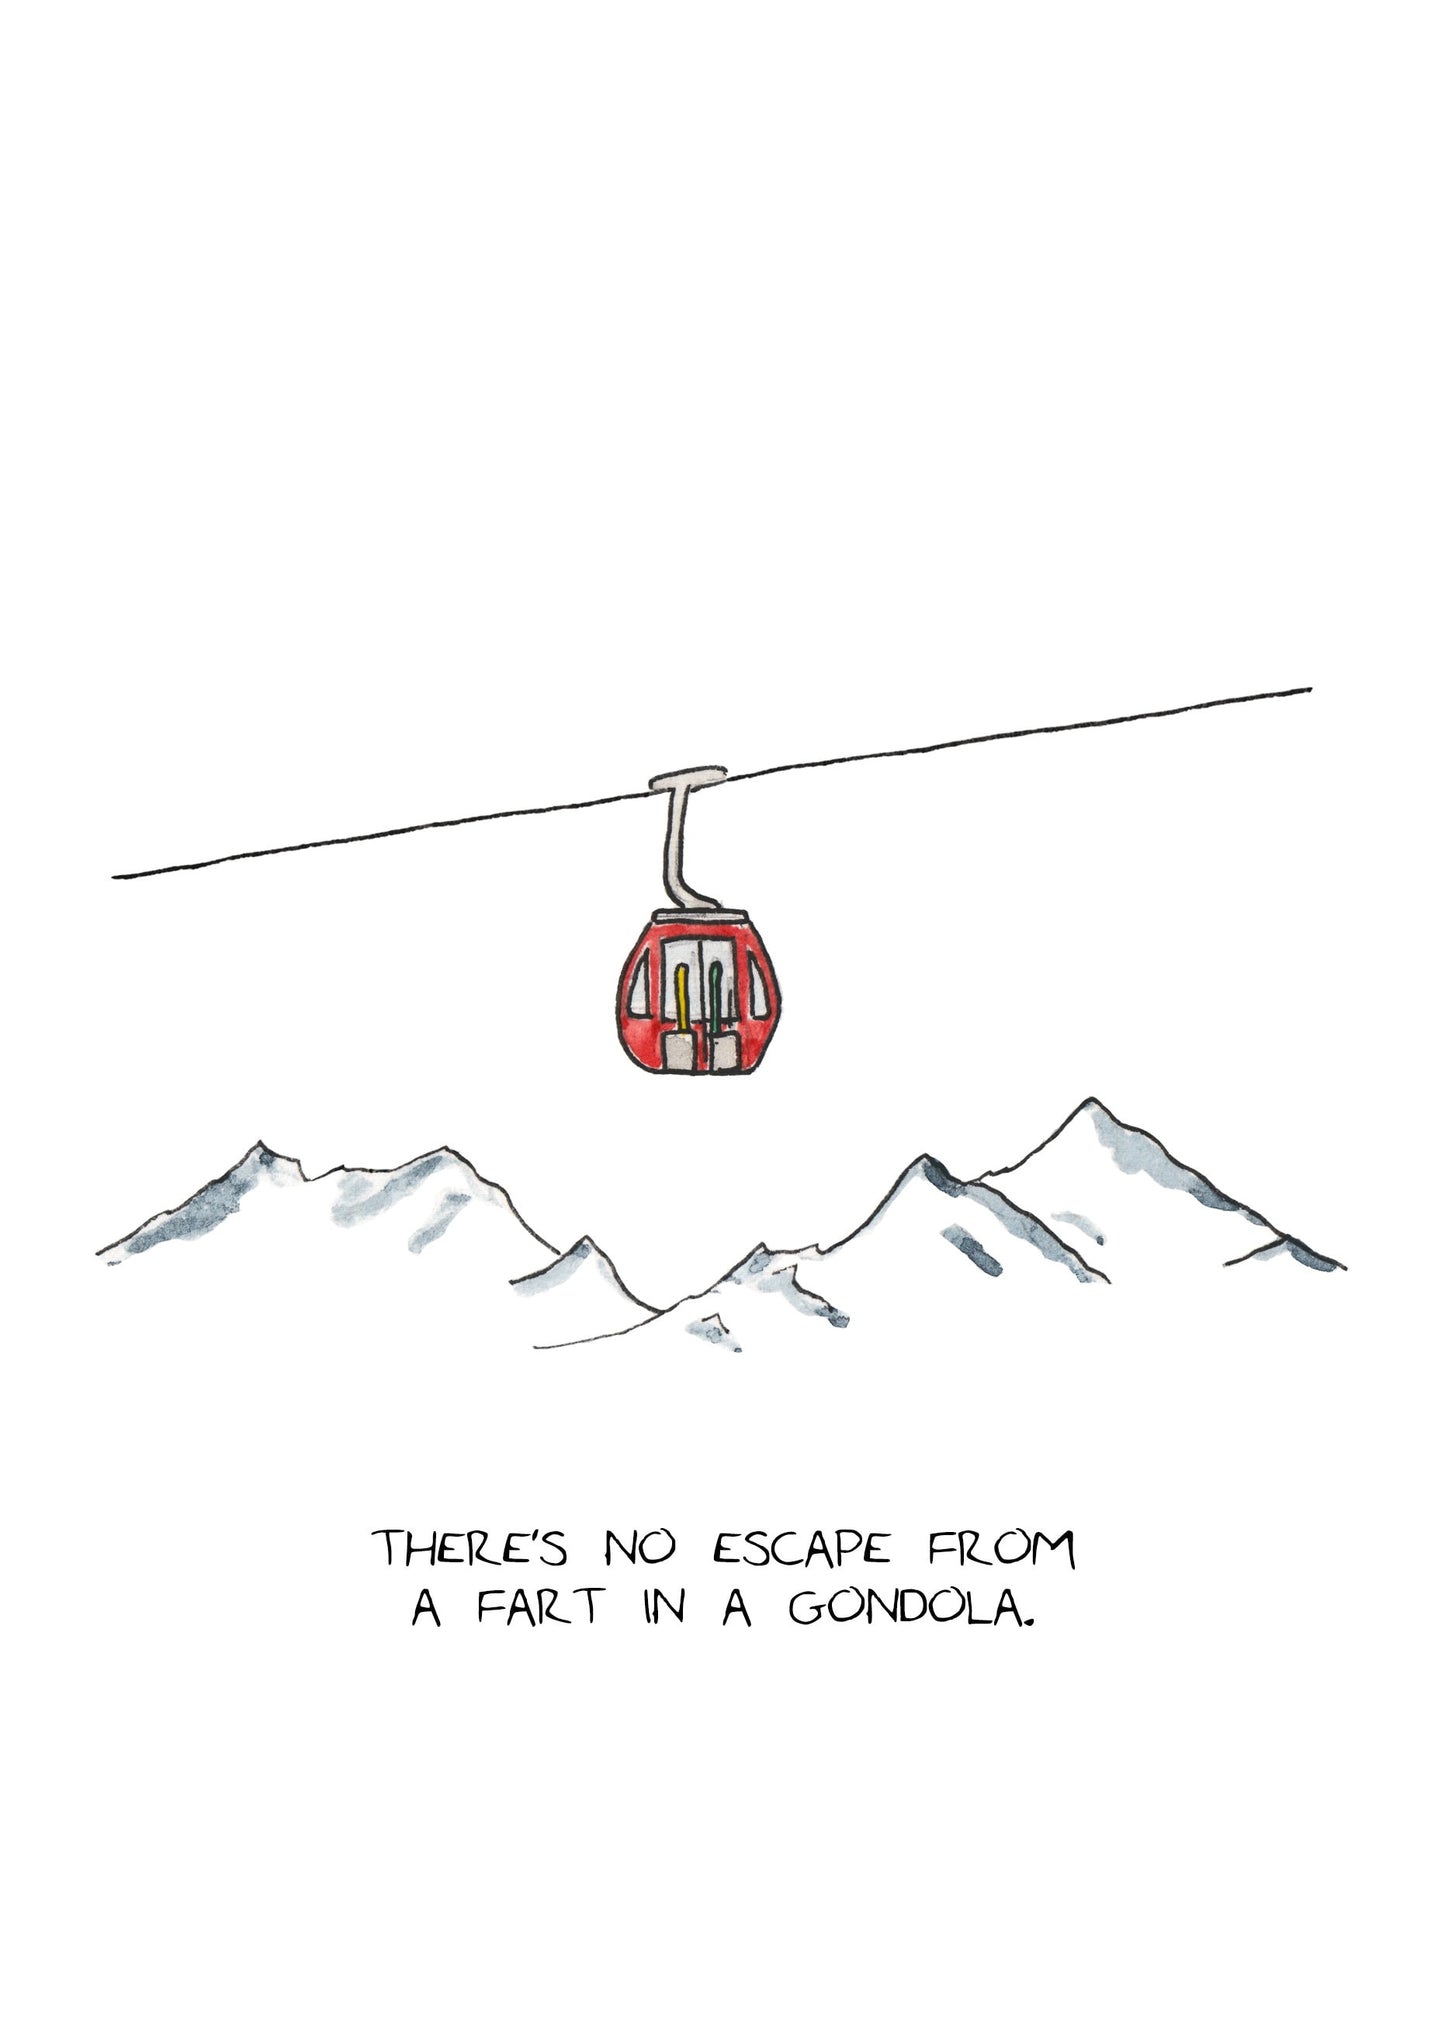 Fart Ski Gondola